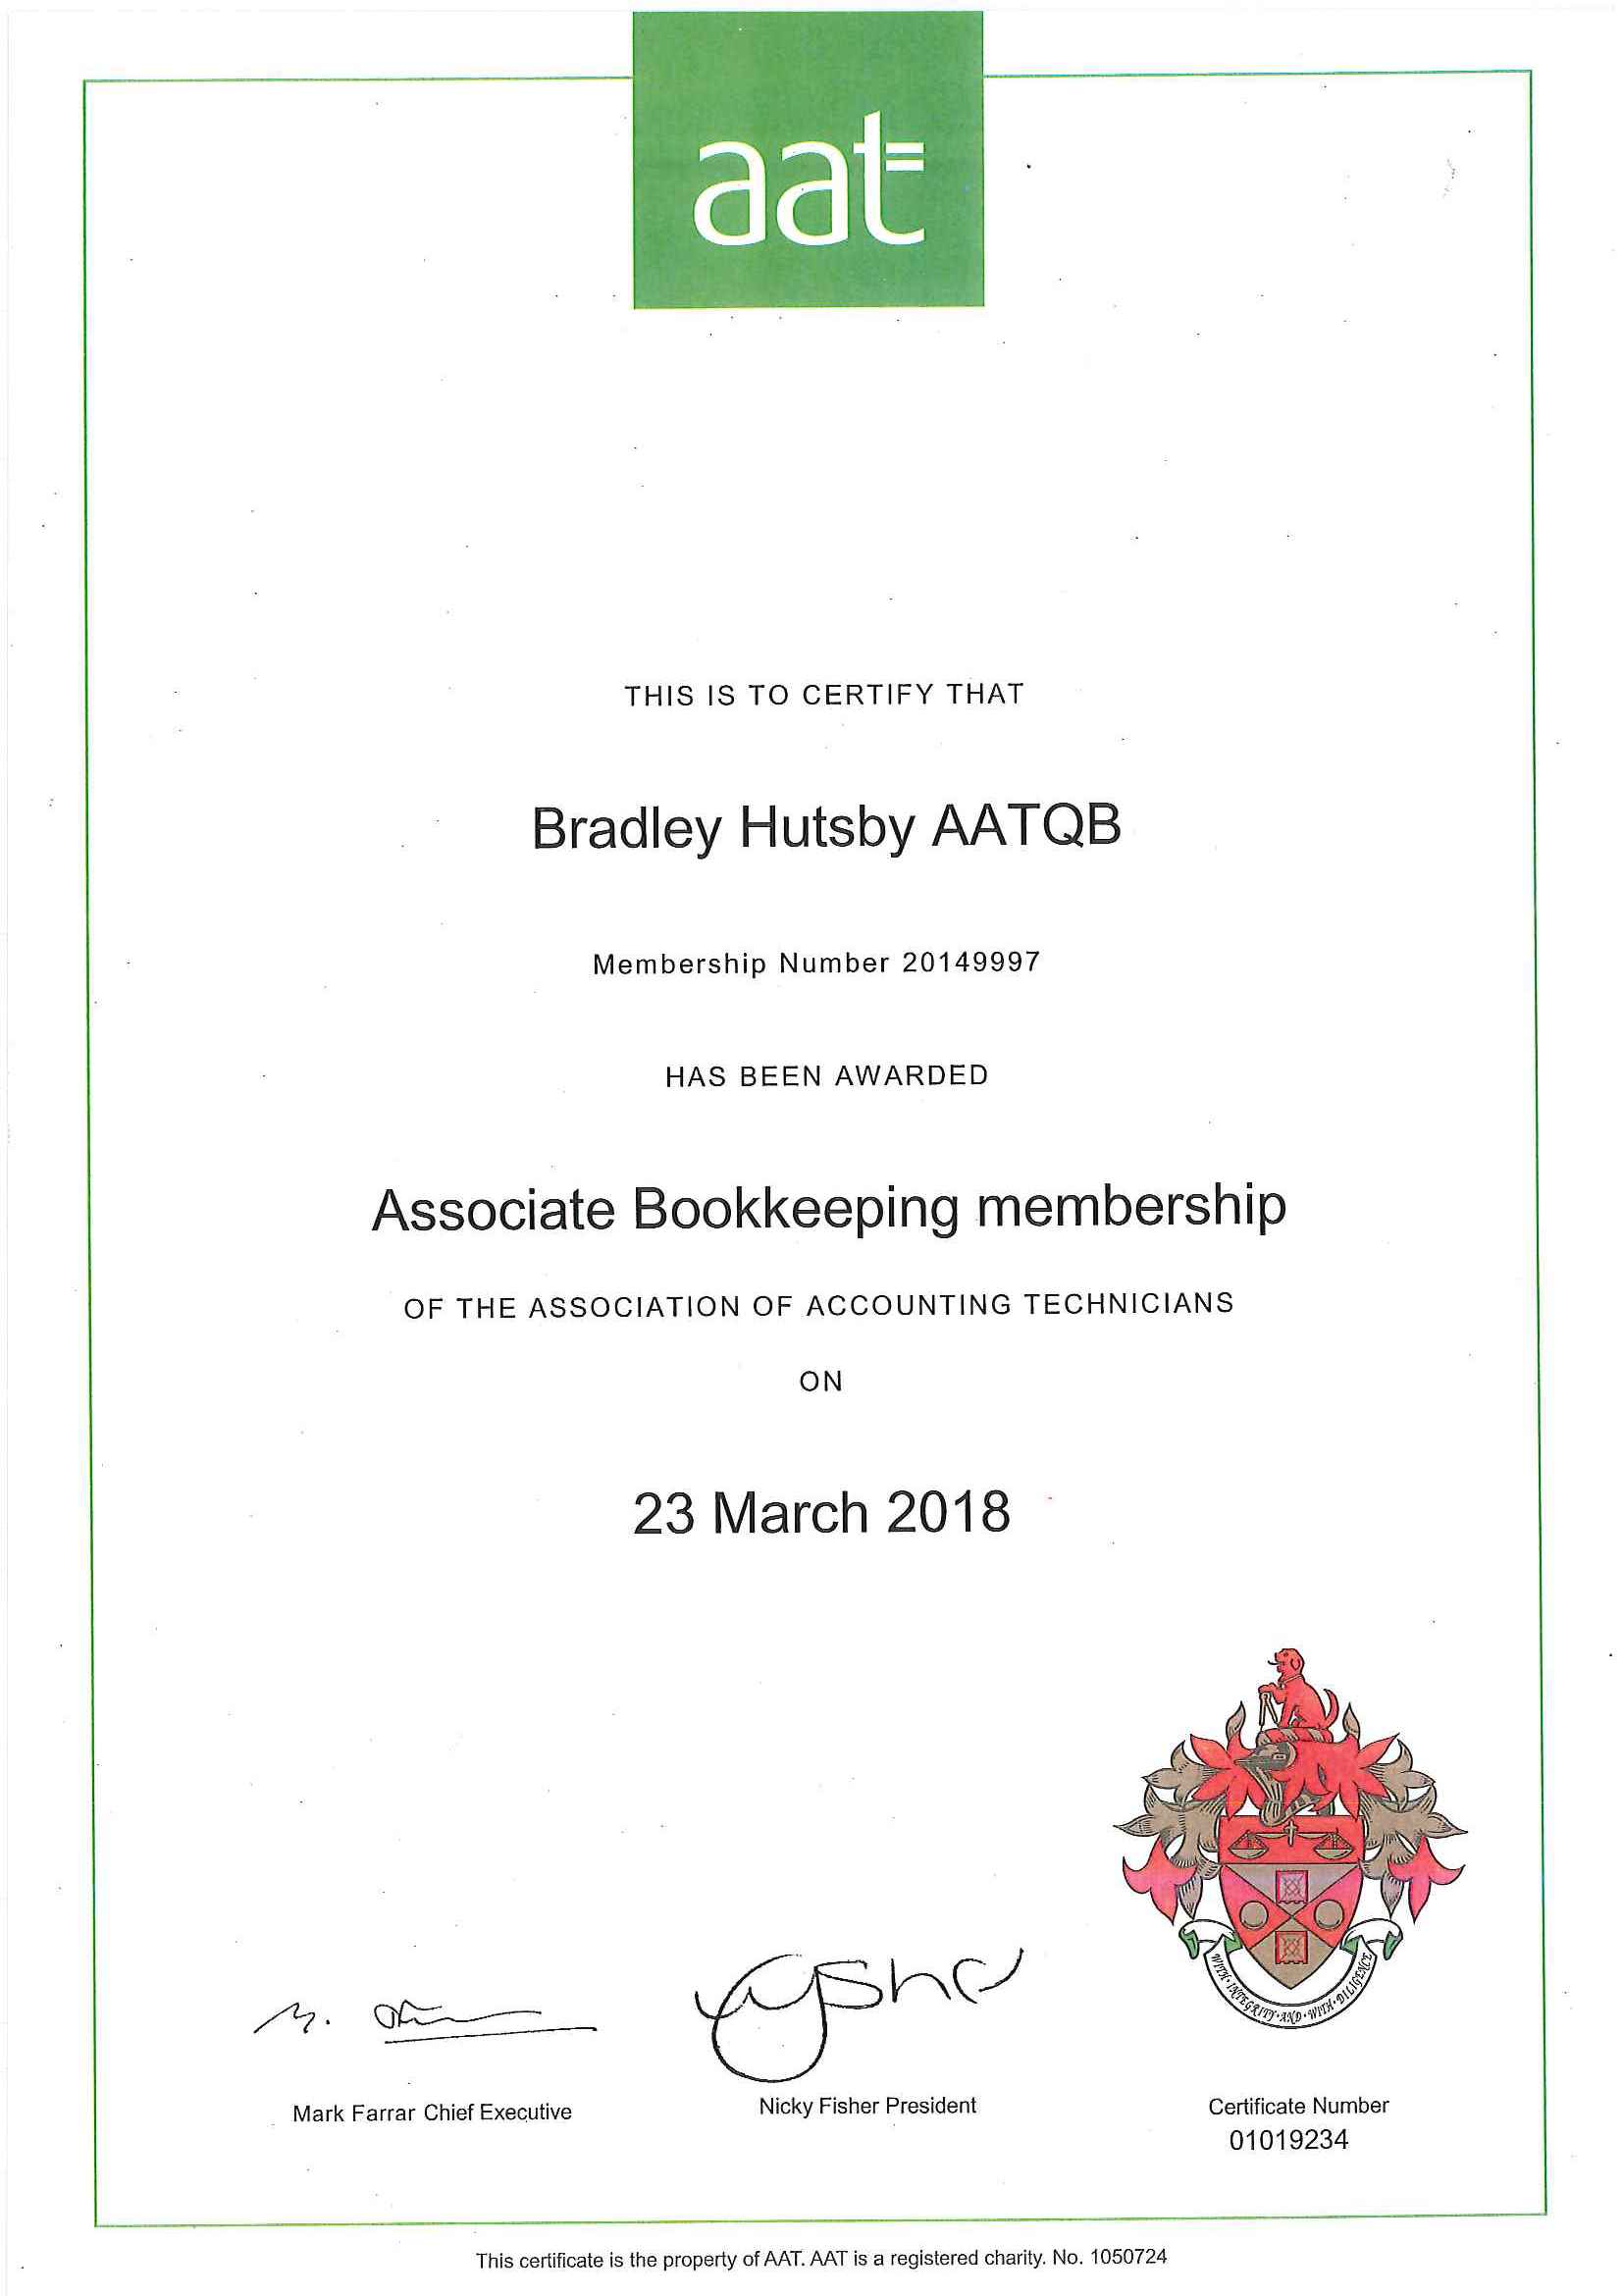 Bradley's Level 2 AAT Bookkeeping Certificate.